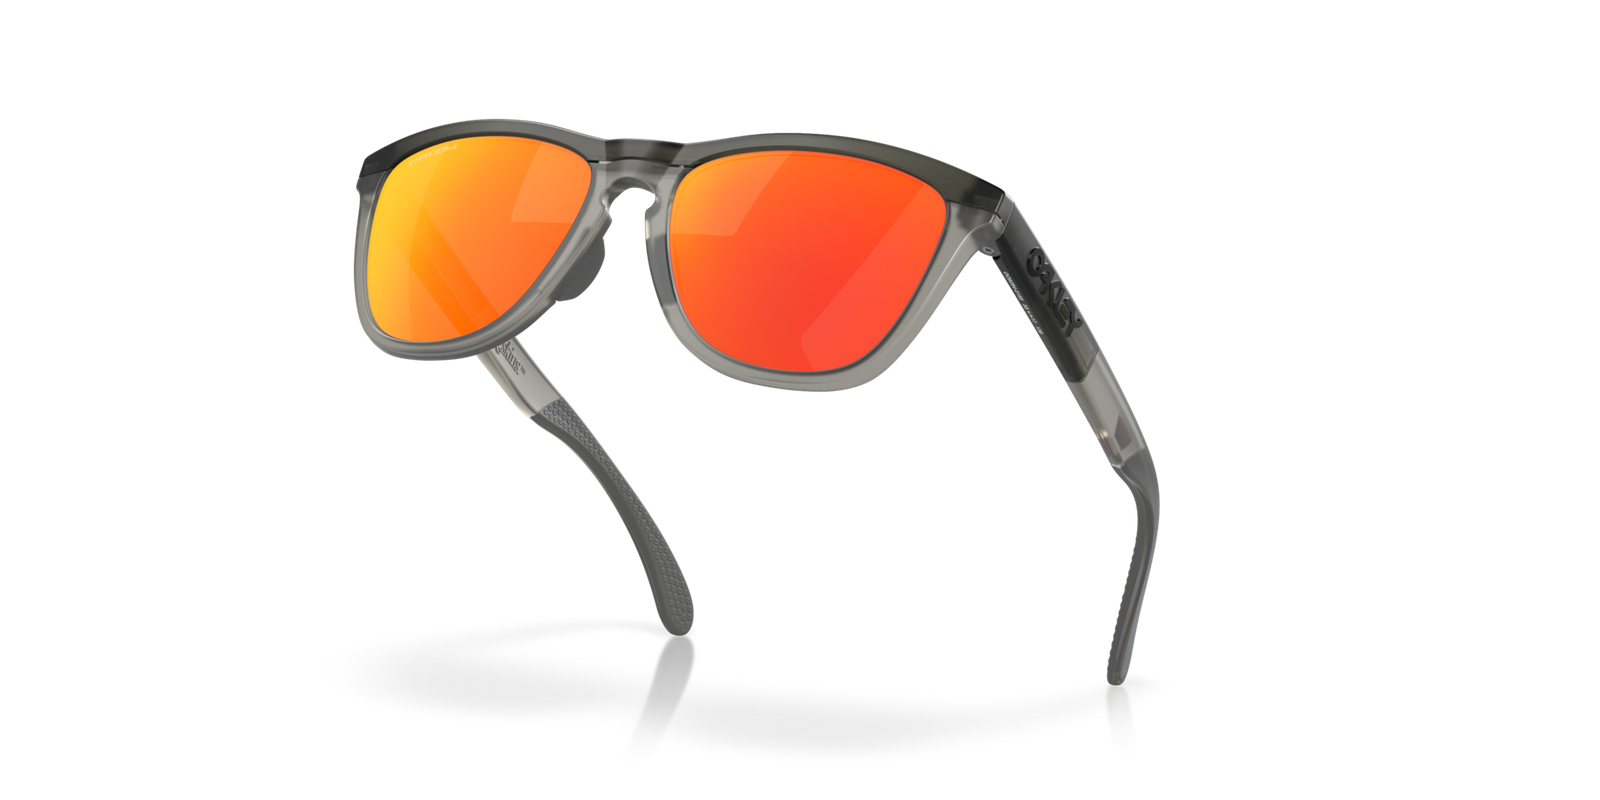  Oakley OO9284 Frogskins Range Round Sunglasses, Brown  Tortoise/Brown Smoke/Prizm Tungsten Polarized, 55 mm : Sports & Outdoors